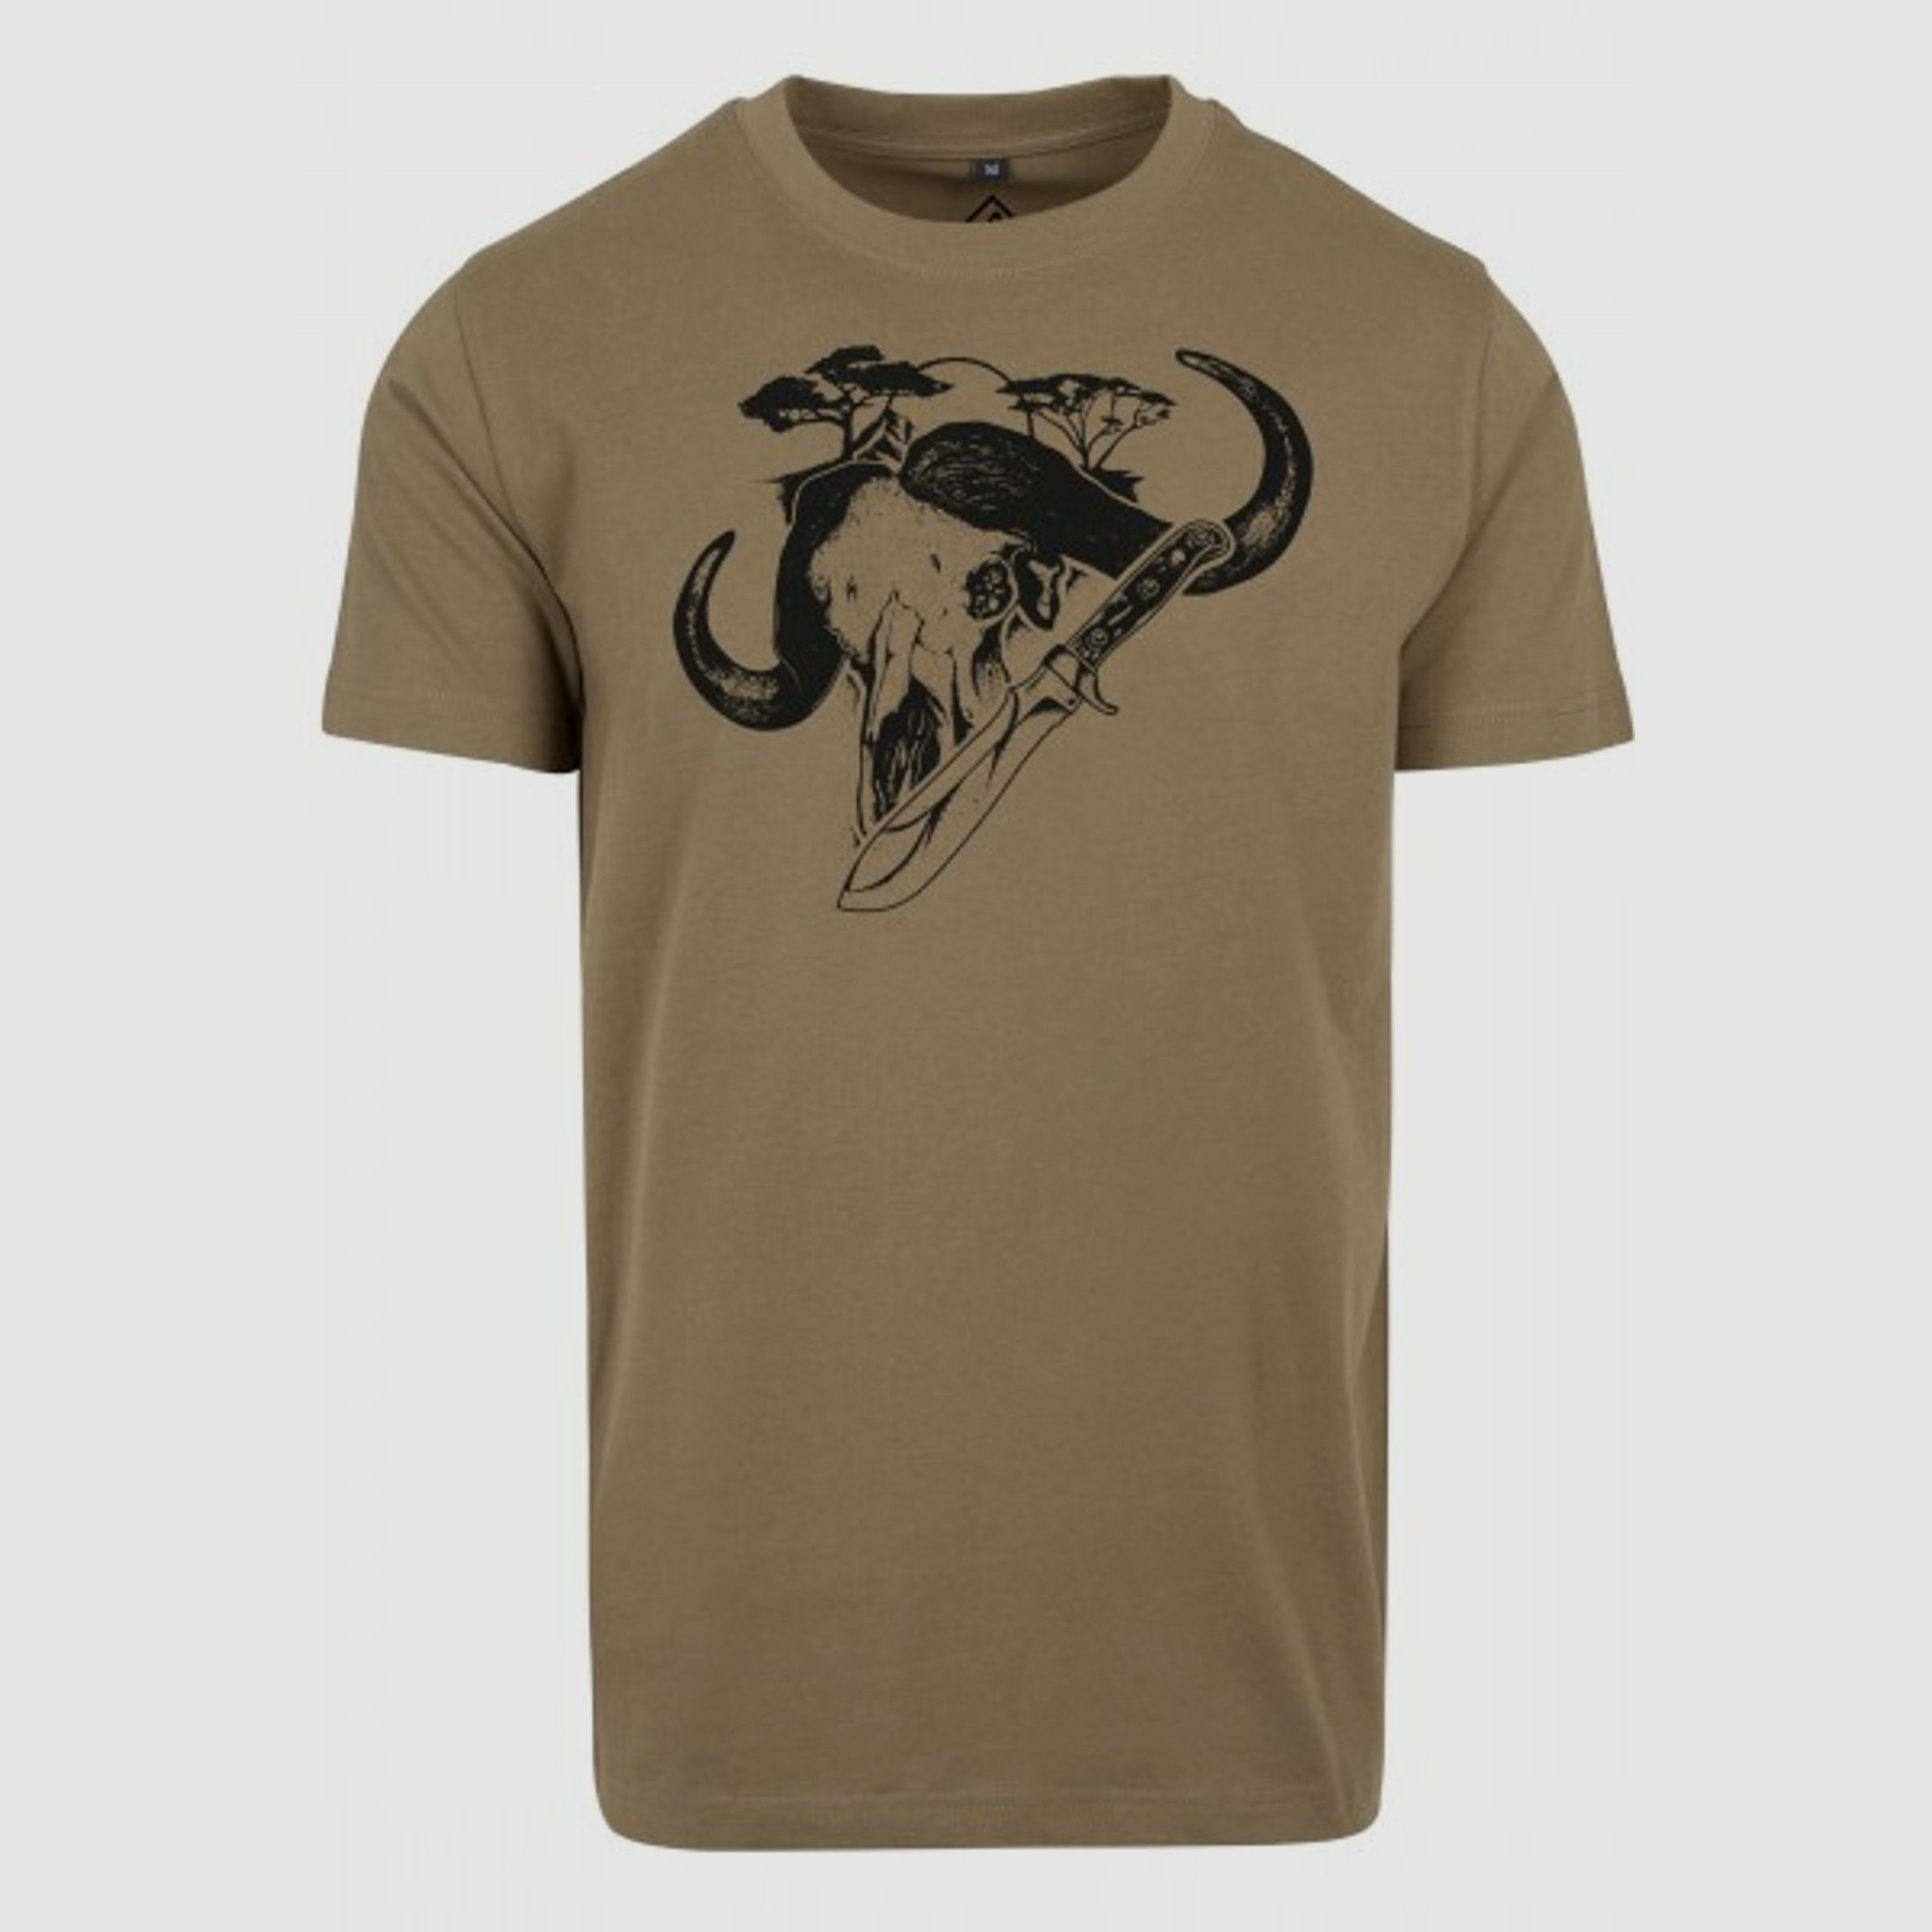 PUMA T-Shirt Motiv: Büffel und white hunter, Farbe: olive